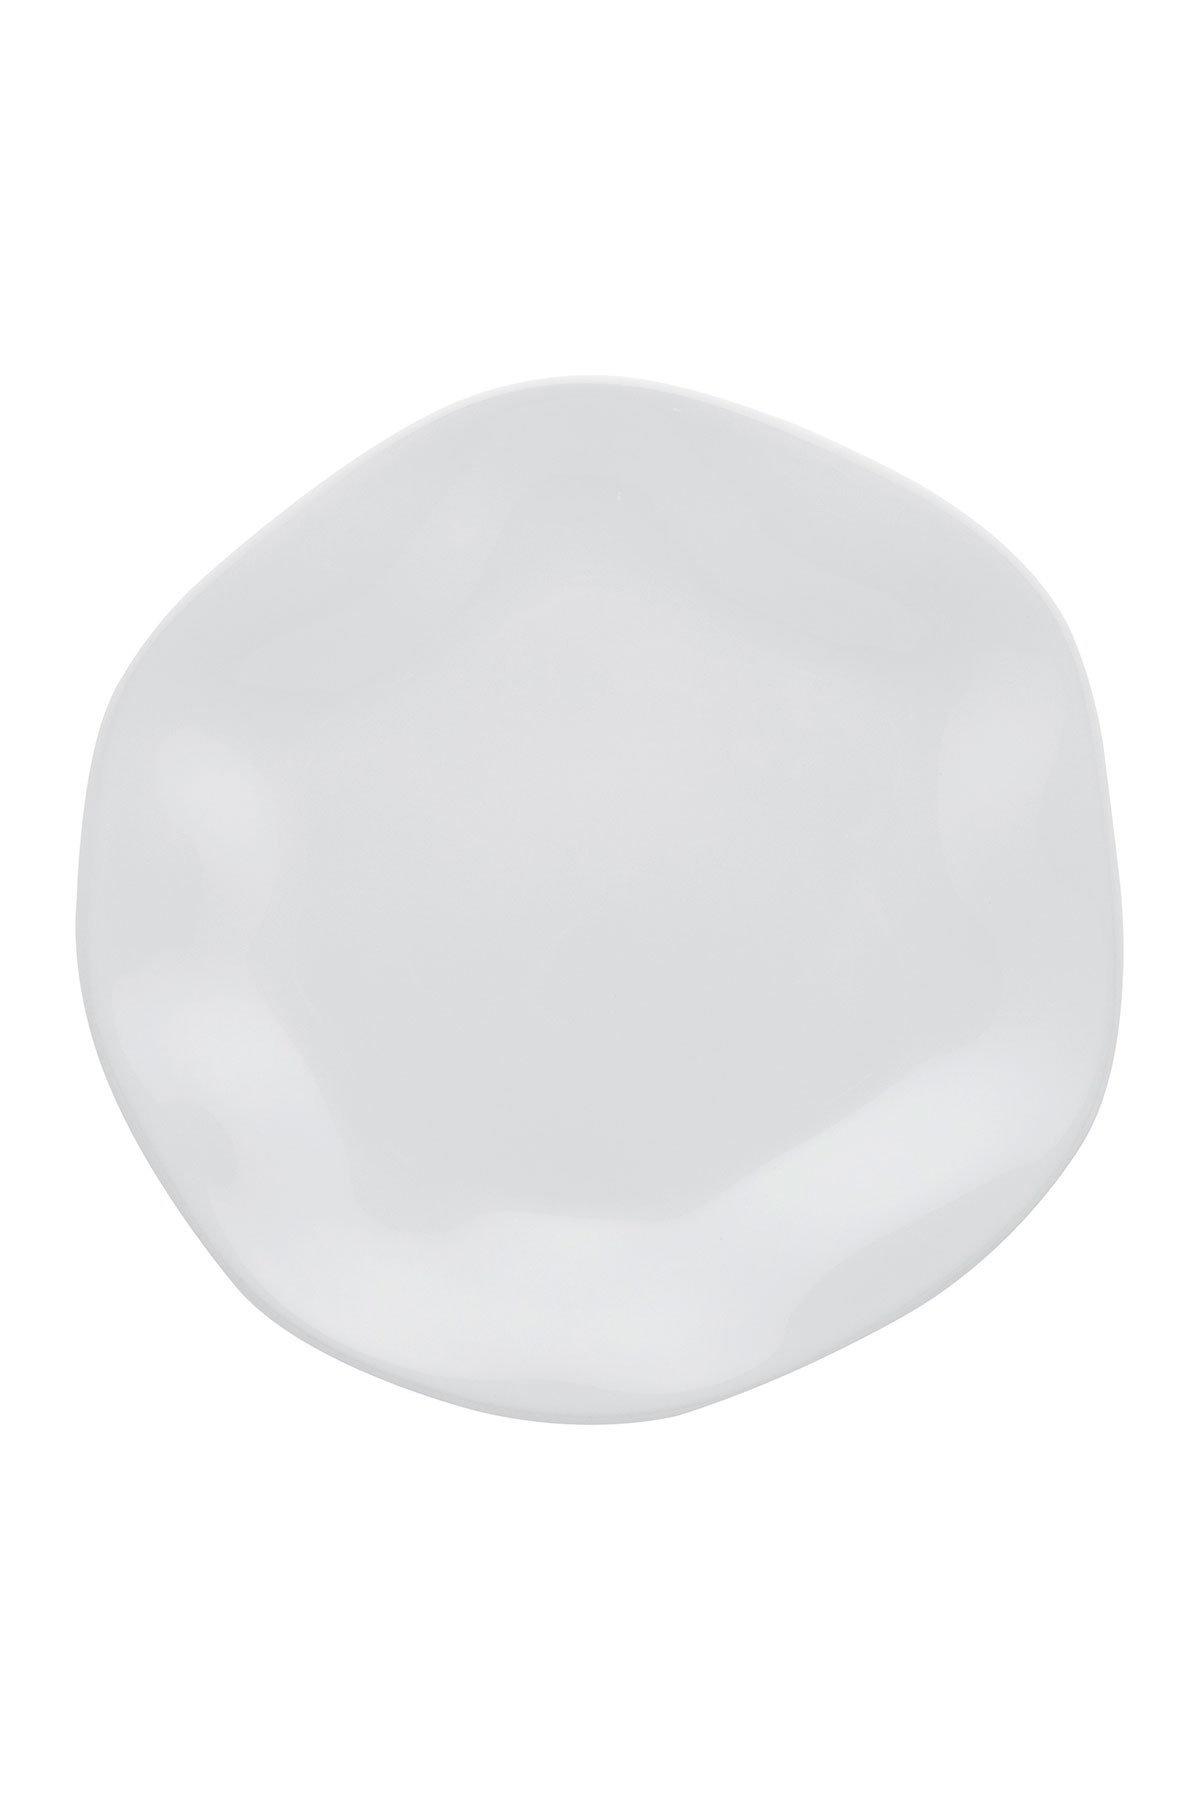 RYO 6 больших 11,02-дюймовых обеденных тарелок - белые Manhattan Comfort